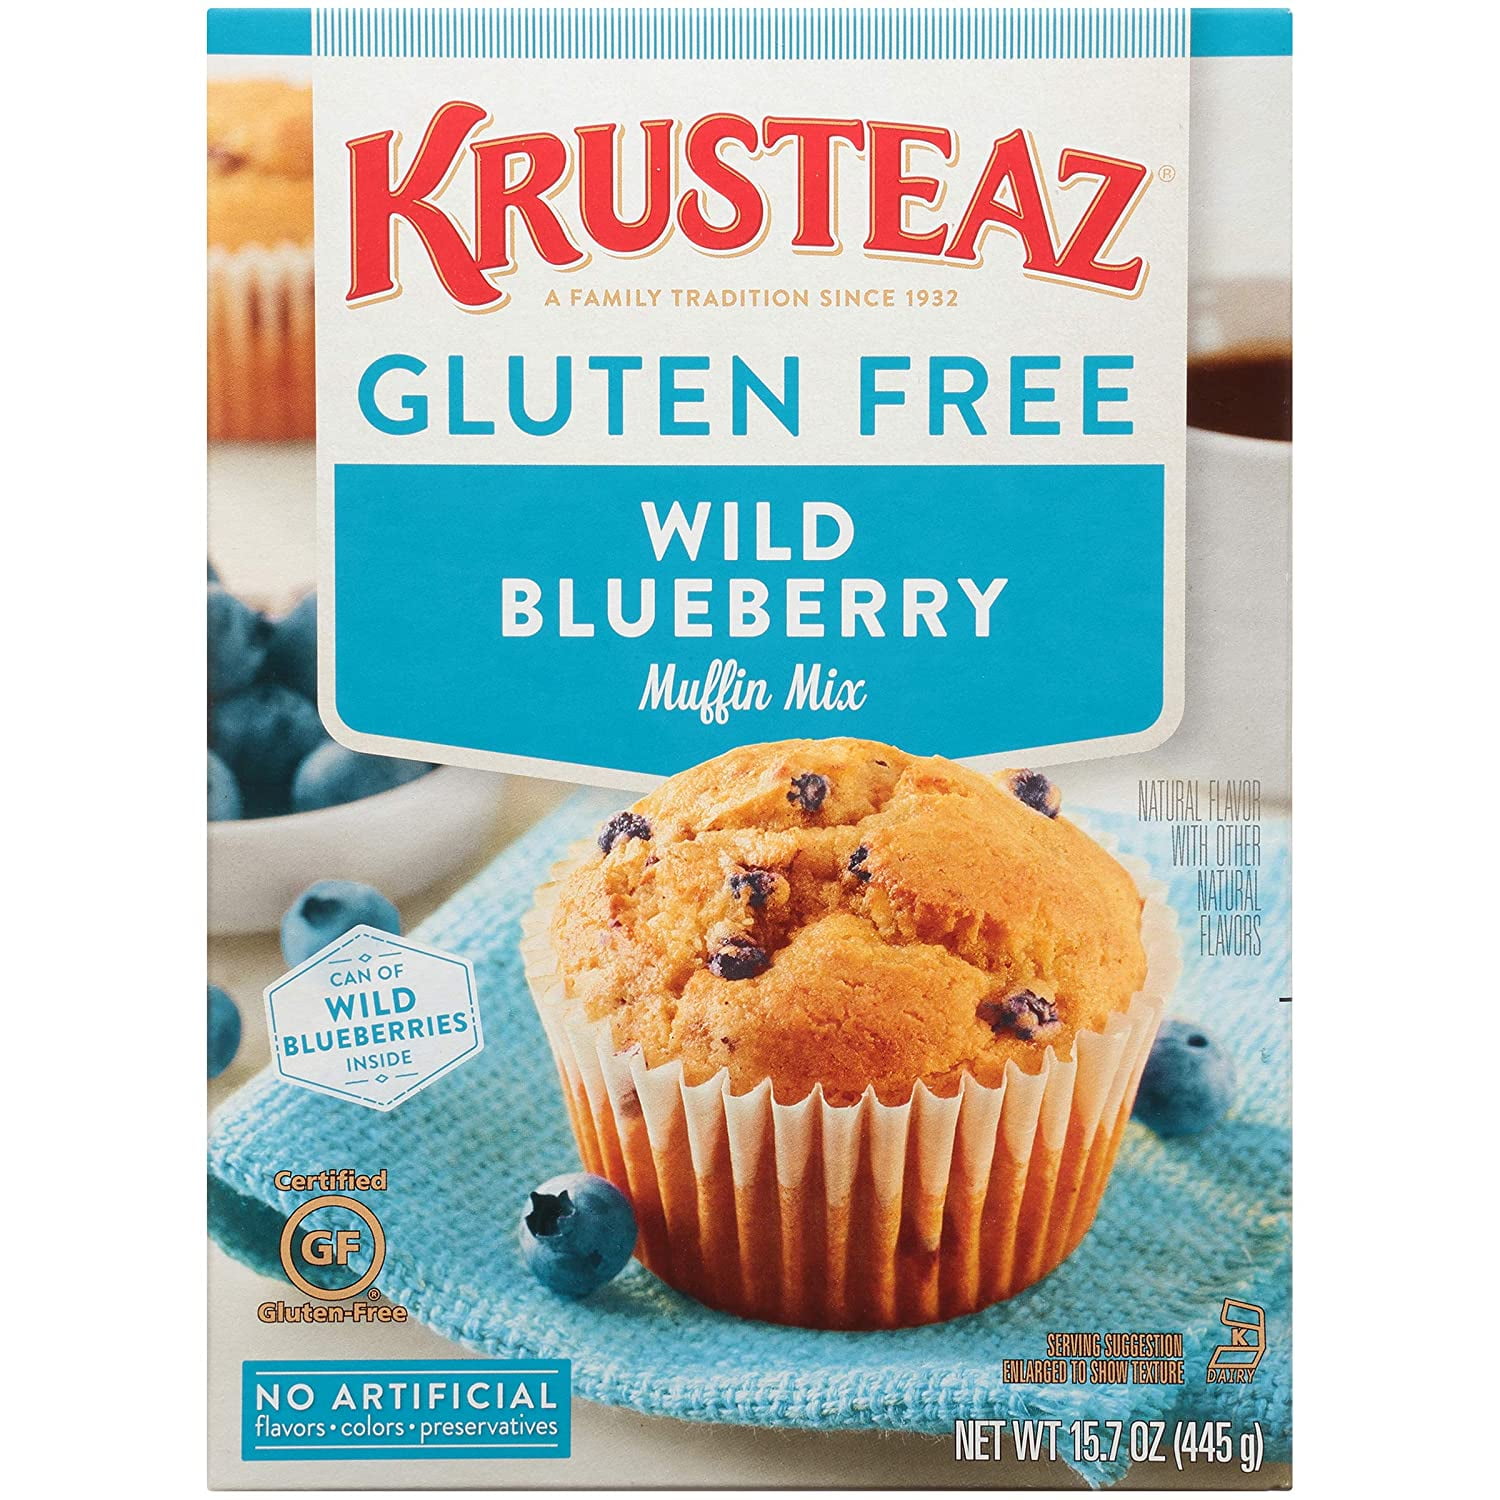 Buy Gluten Free Blueberry Muffin Mix, 15.7 oz Box at Walmart.com. 